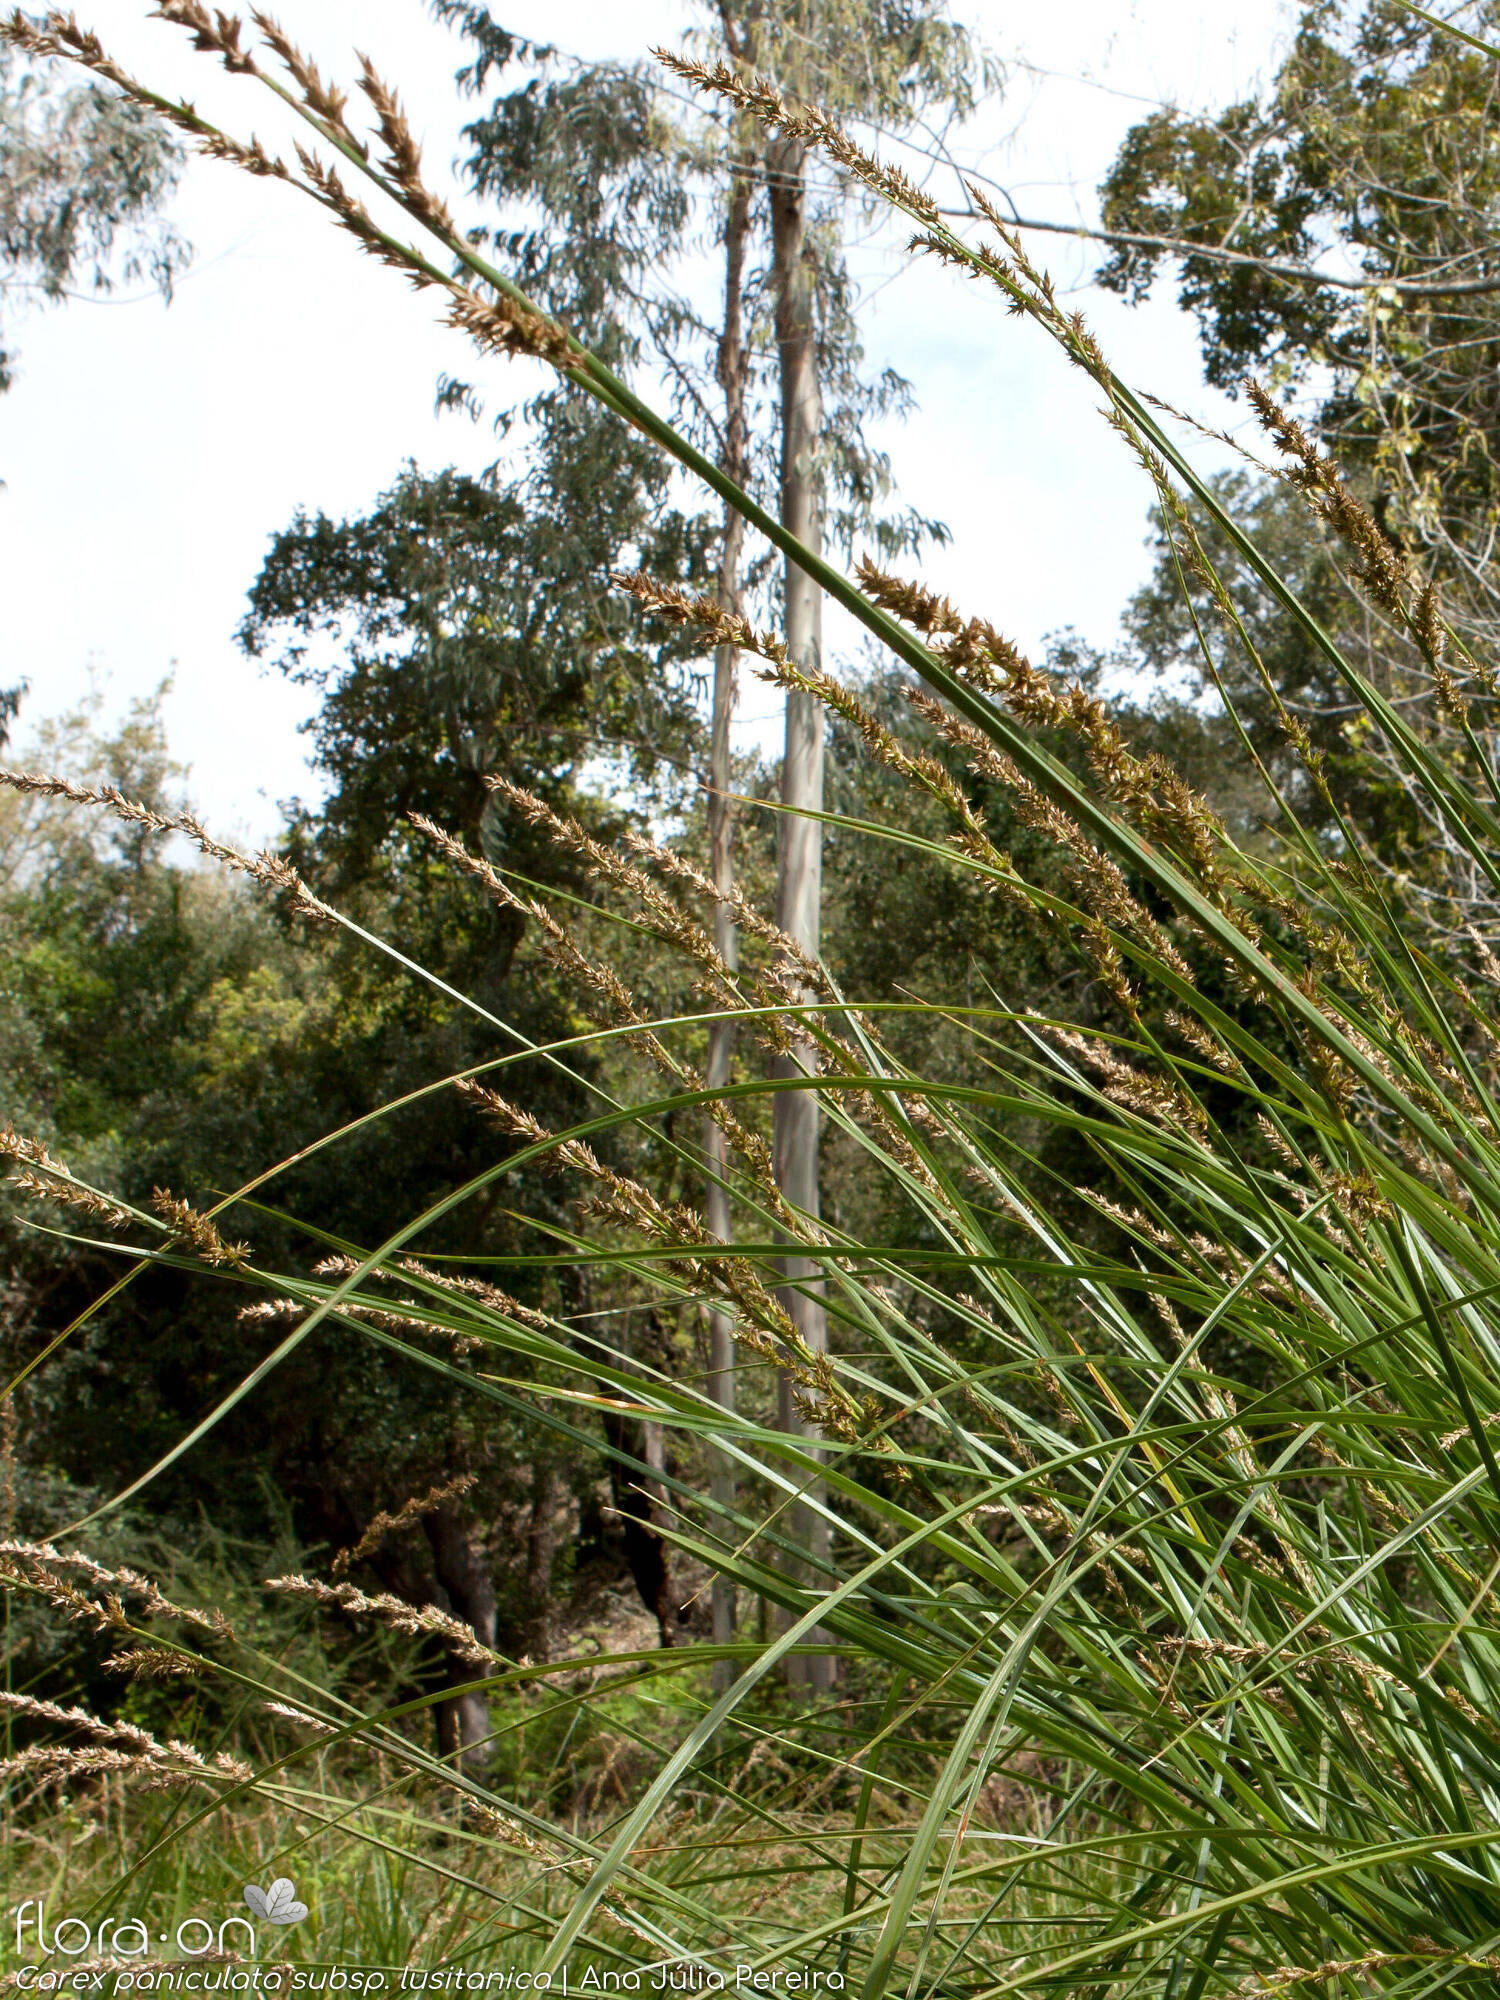 Carex paniculata lusitanica - Hábito | Ana Júlia Pereira; CC BY-NC 4.0